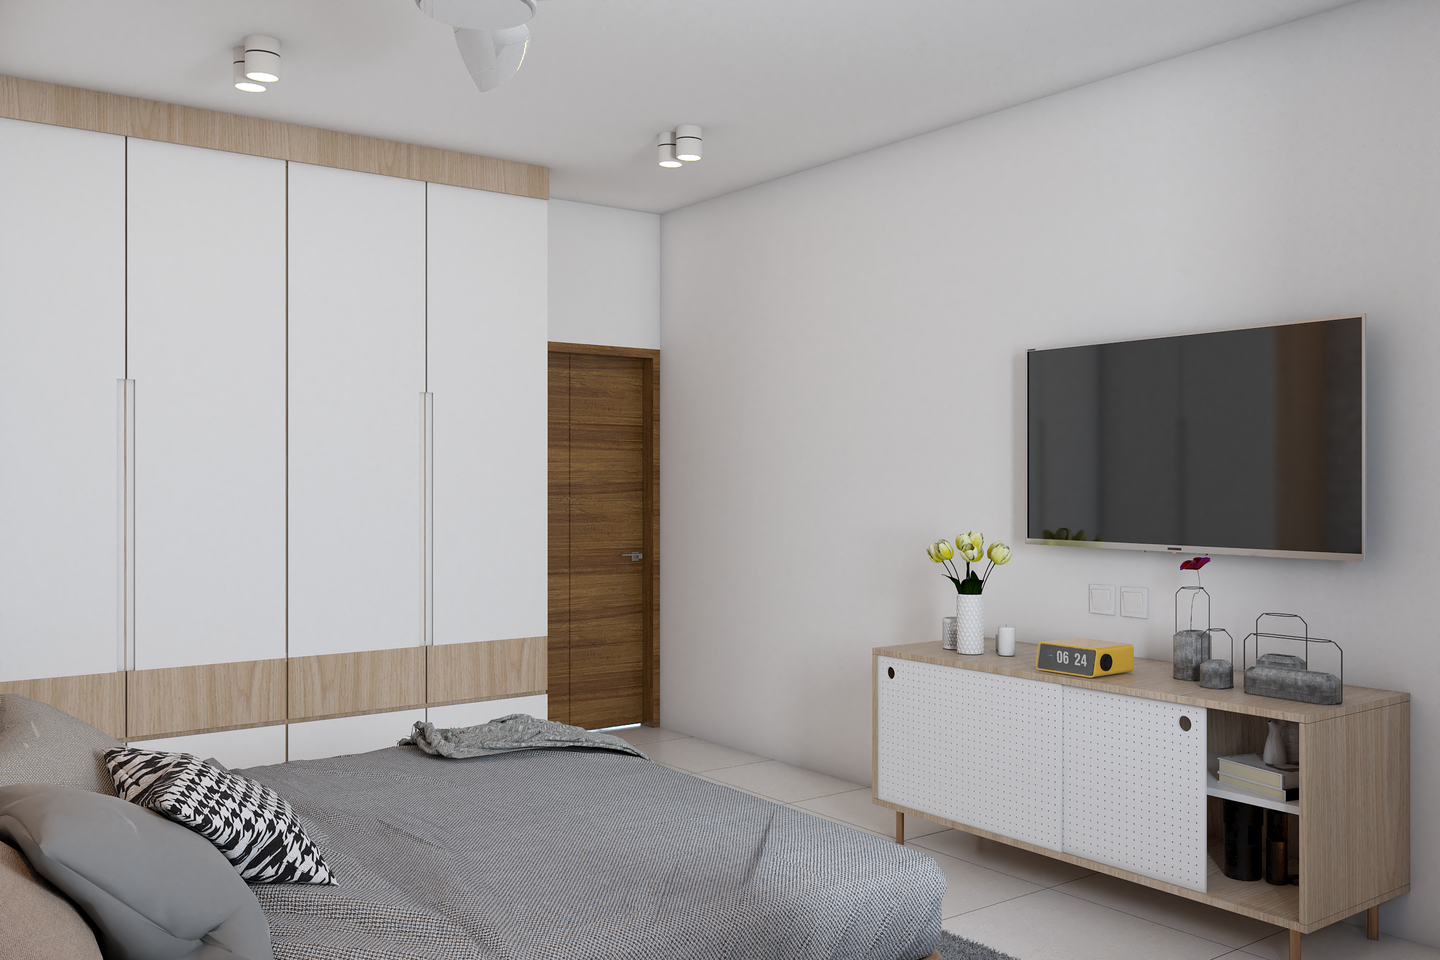 Scandinavian Bedroom Design with White and Wood Tones - Livspace